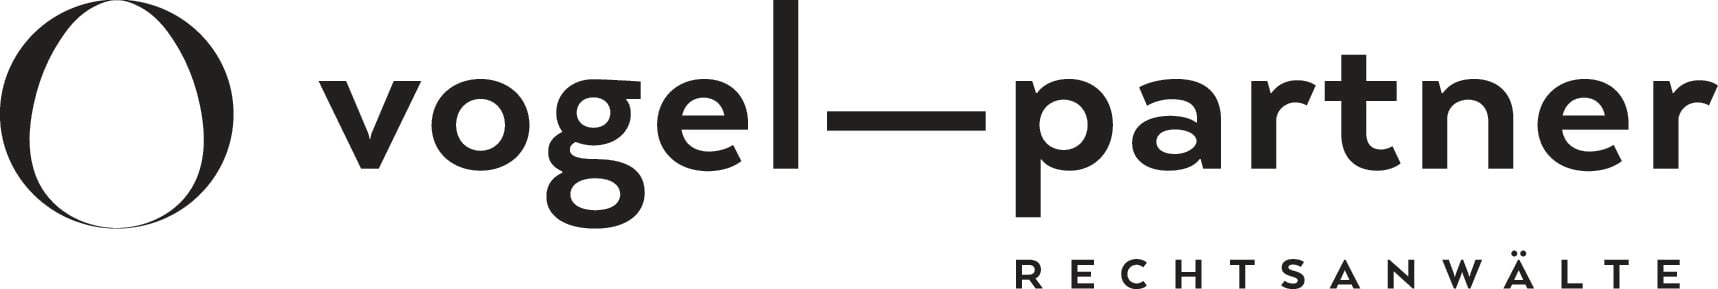 Vogel Partner Logo